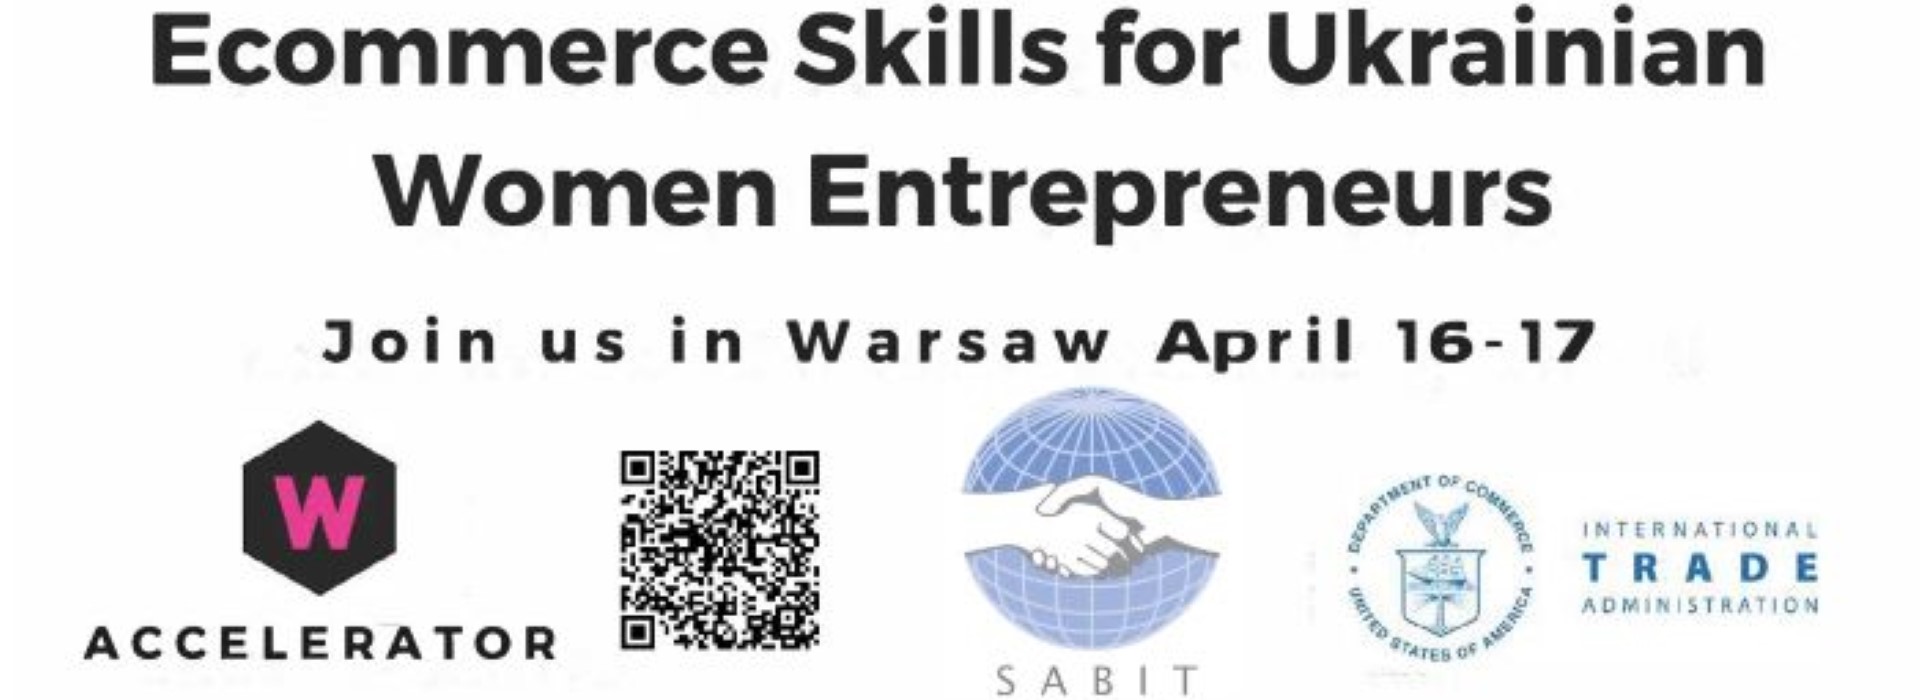 SABIT Program Ecommerce Training: Live from Warsaw